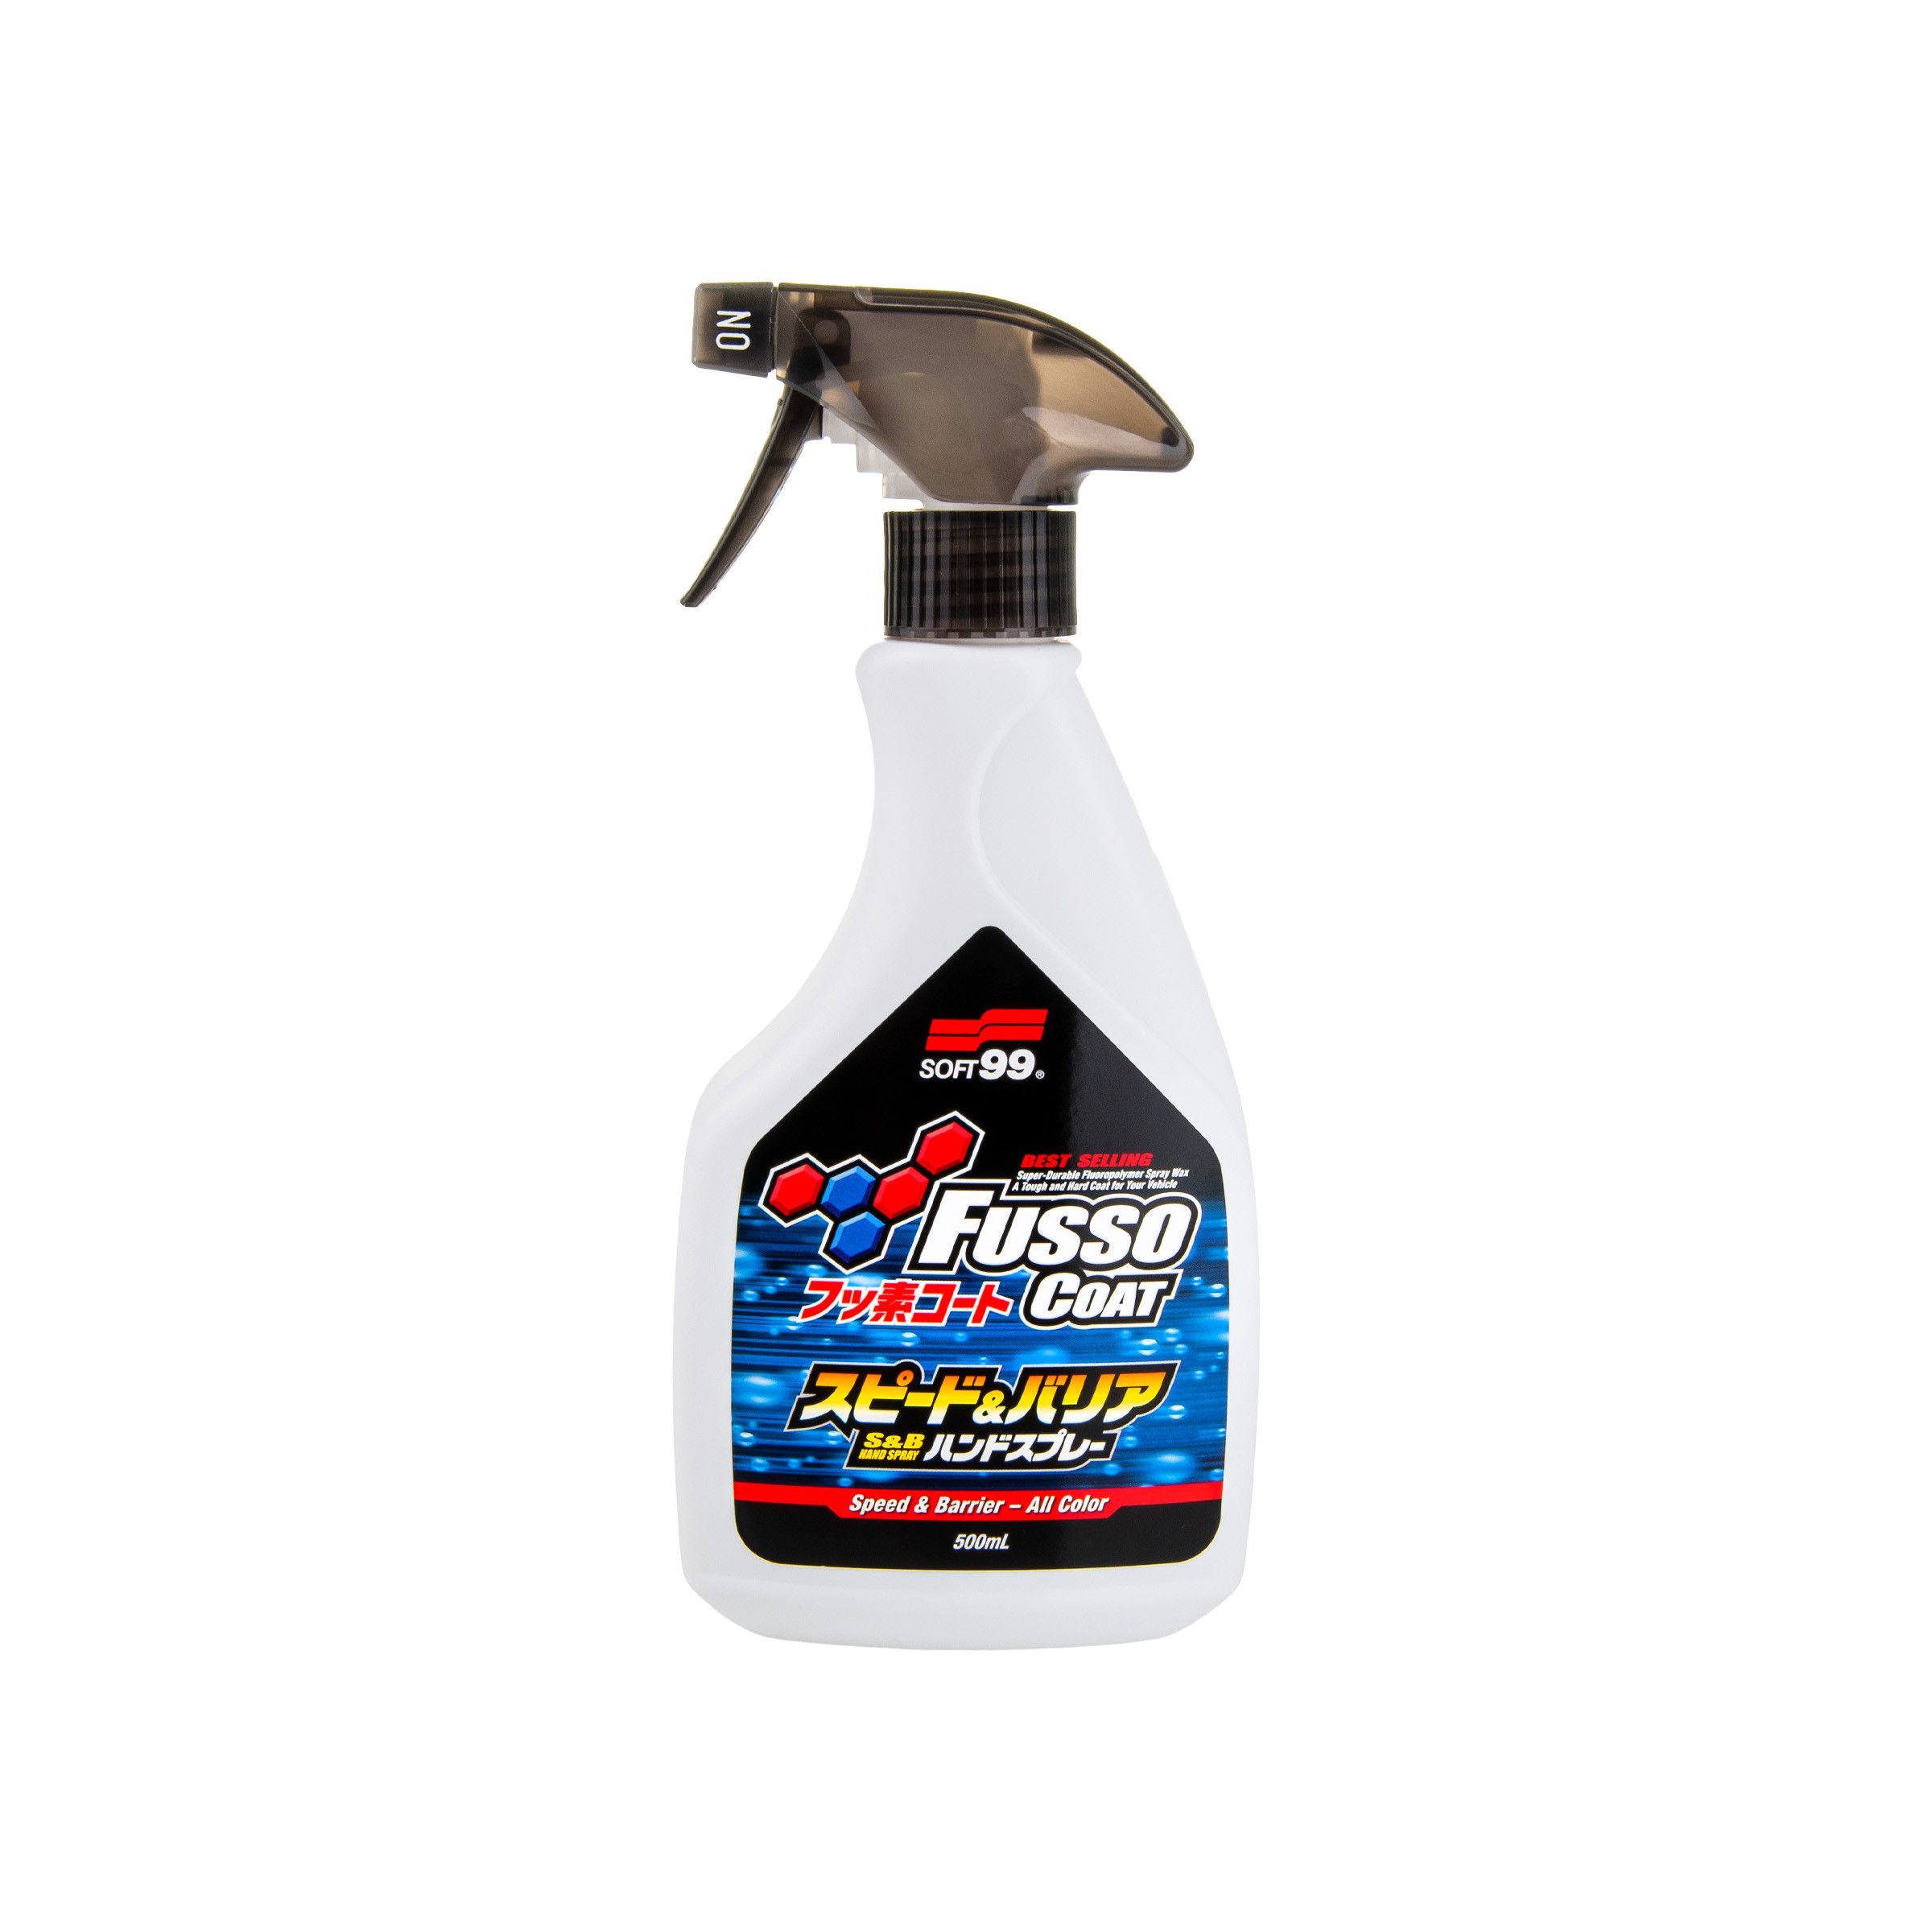 Fusso Coat Speed & Barrier, quick detailer, 500 ml - Soft99